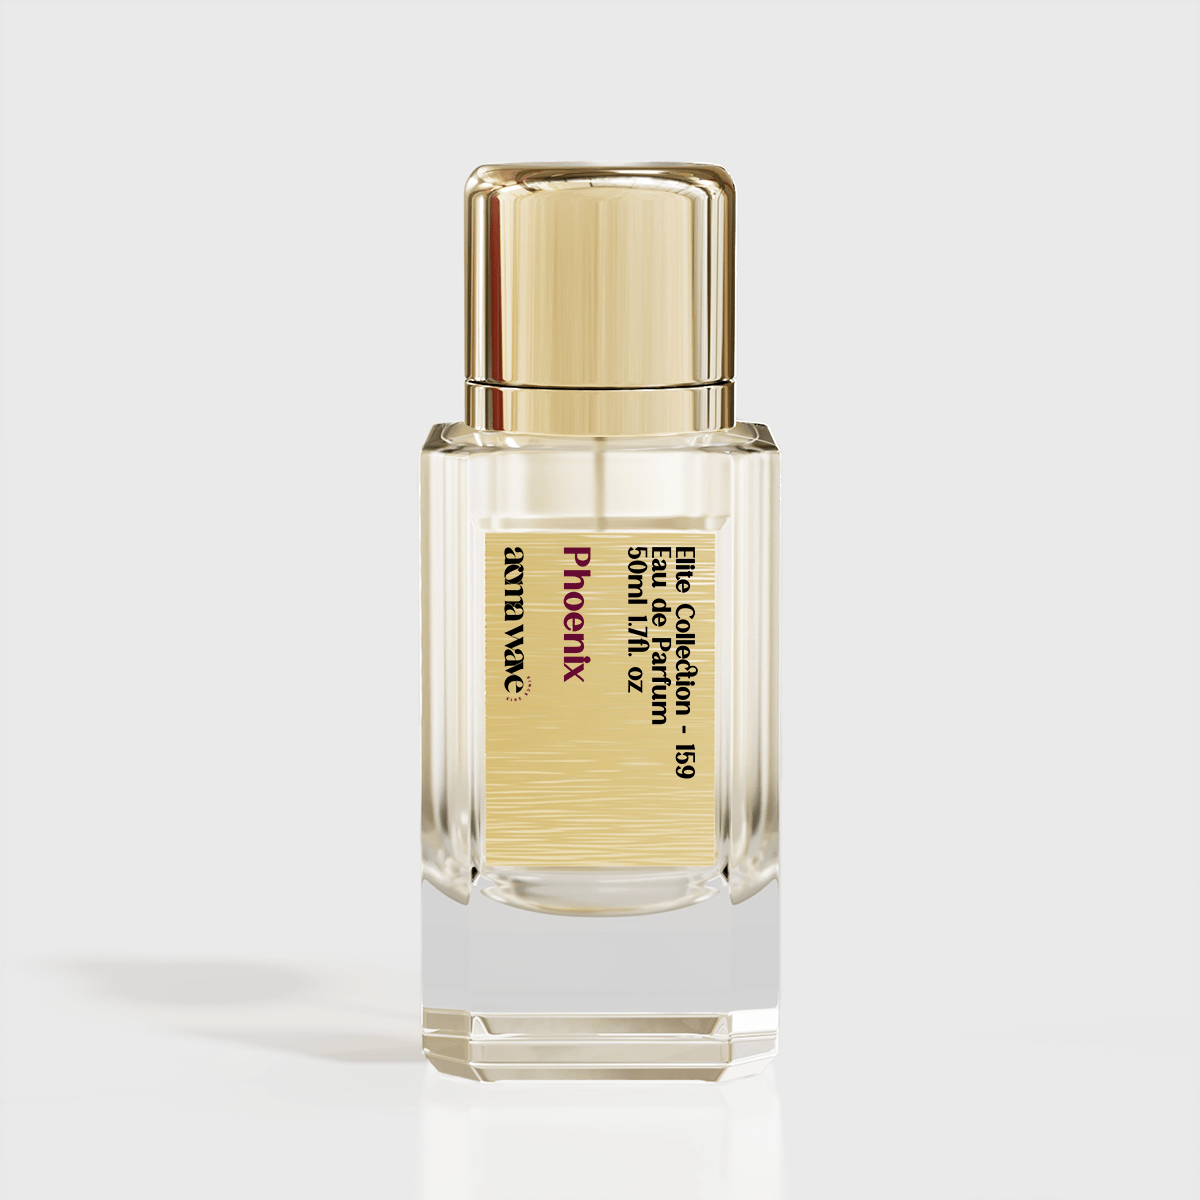 Louis Vuitton Nouveau Monde Fragrance Review - Looking Feeling Smelling  Great